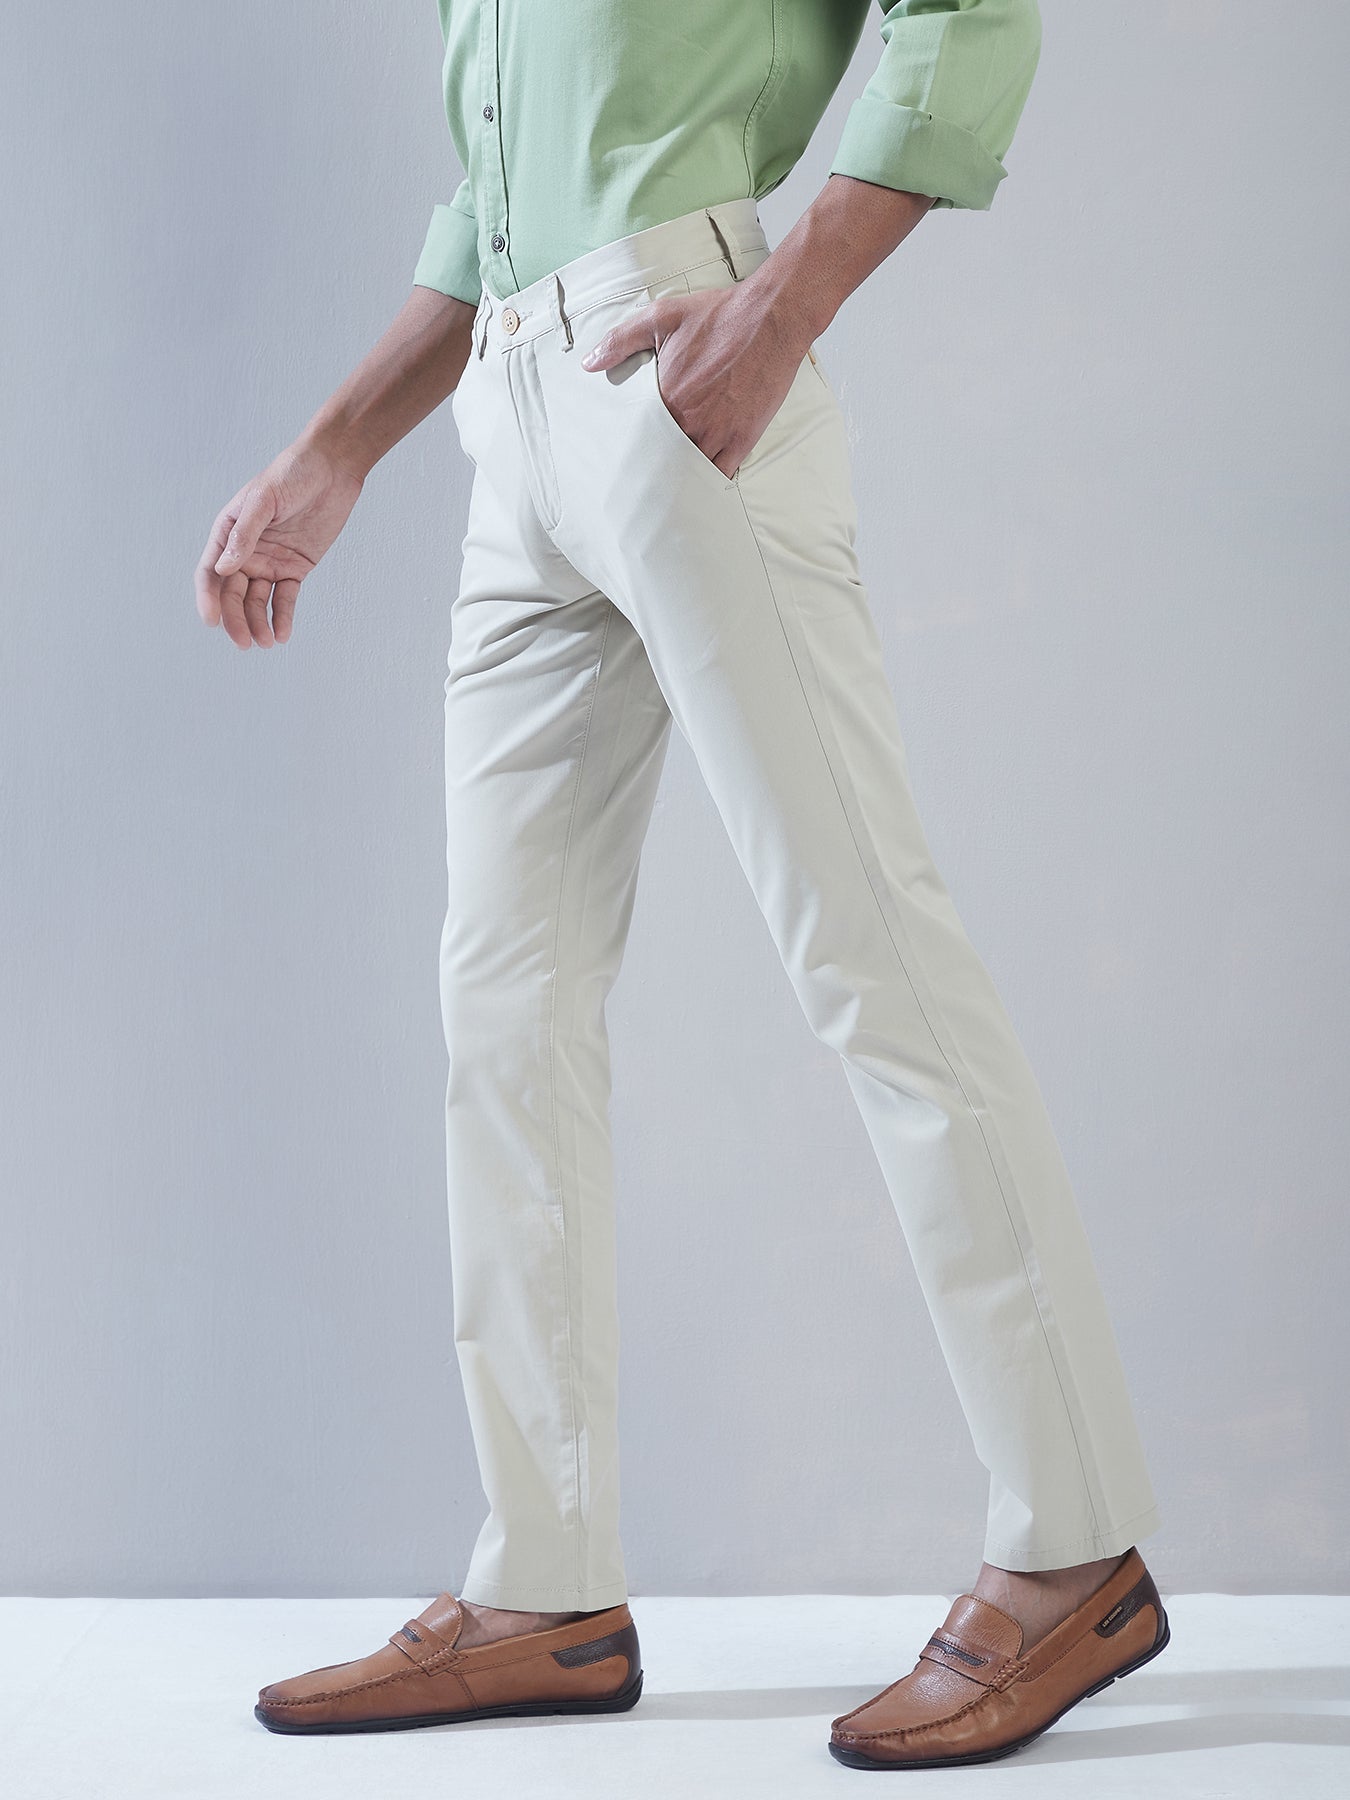 Cotton Stretch Pista Green Plain Ultra Slim Fit Flat Front Casual Trouser